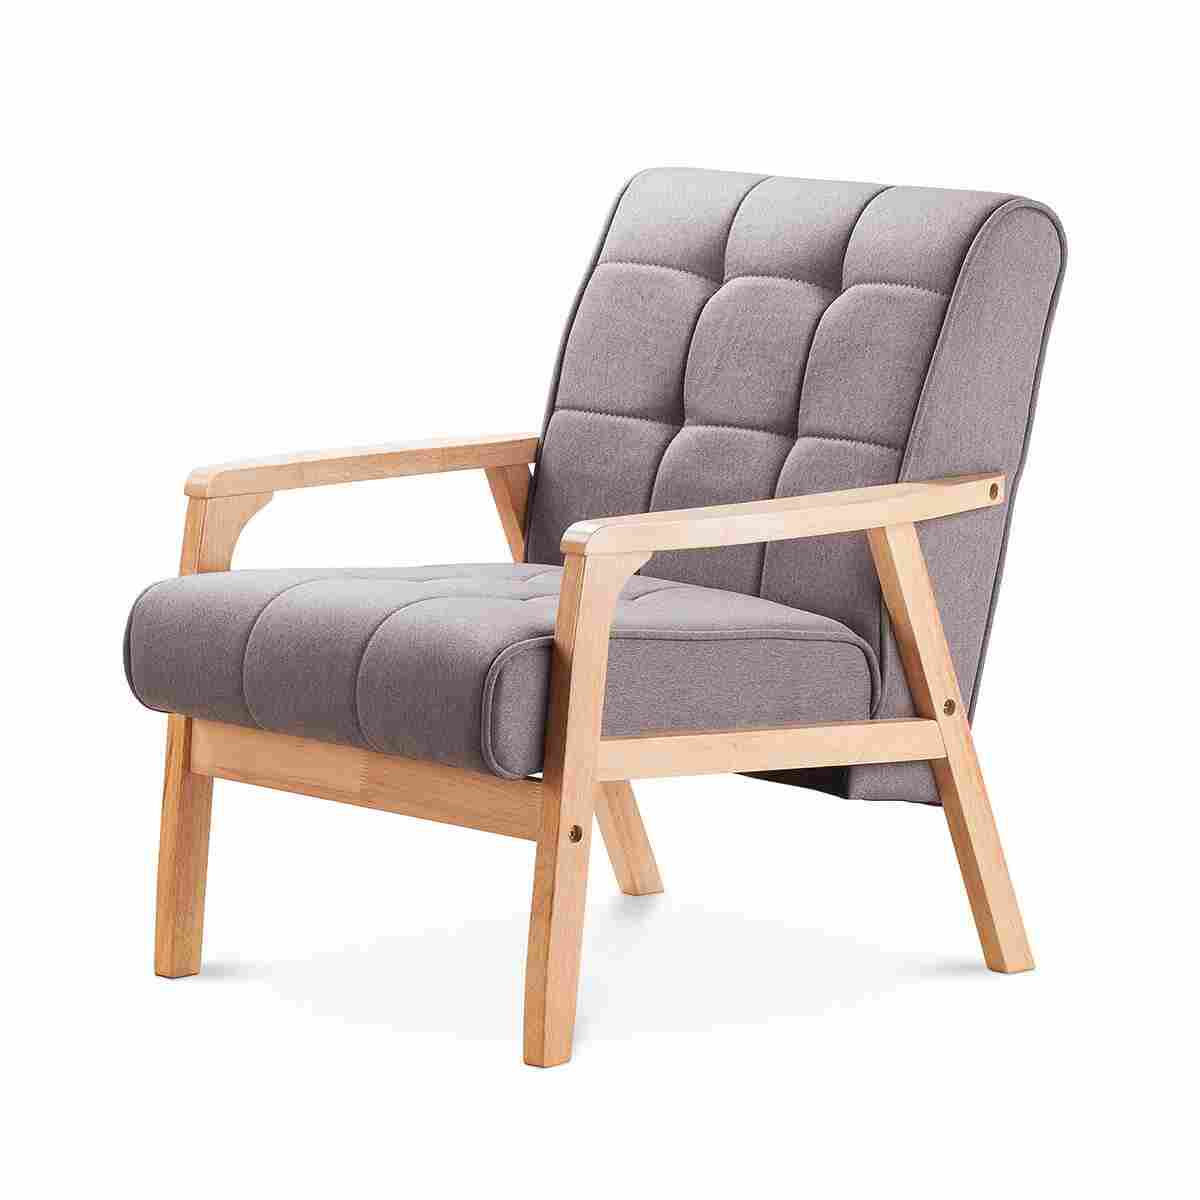 Wooden armchair â€“ HEMED